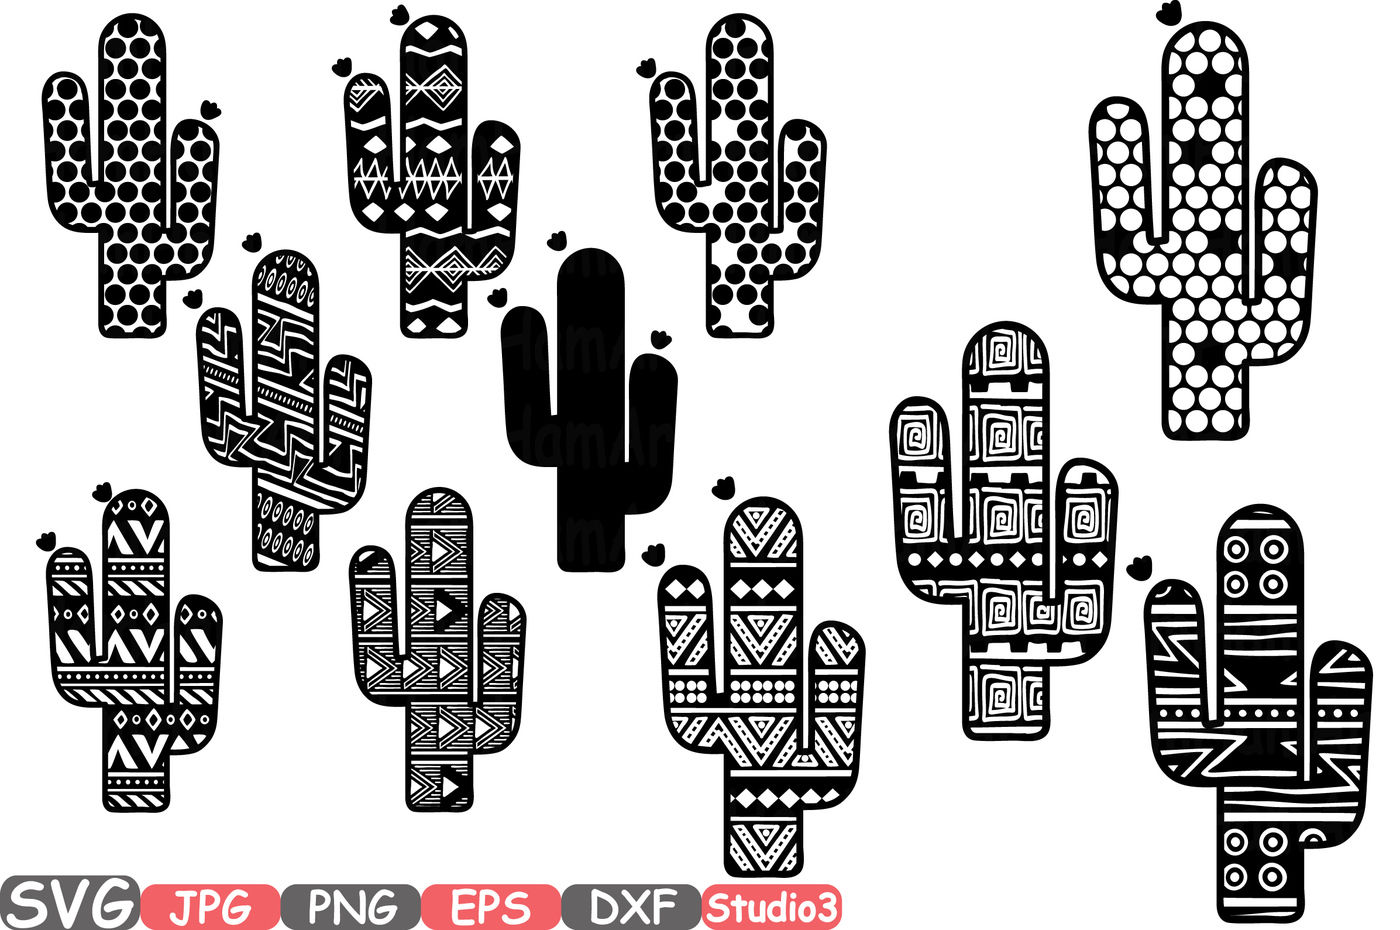 ori 86651 36736b59c8c6d7e9d95ef94792f1c12db9b80f3a cactus chevron monogram silhouette svg cutting files digital clip art graphic studio3 cricut cuttable die cut machines aztec cactus 41sv